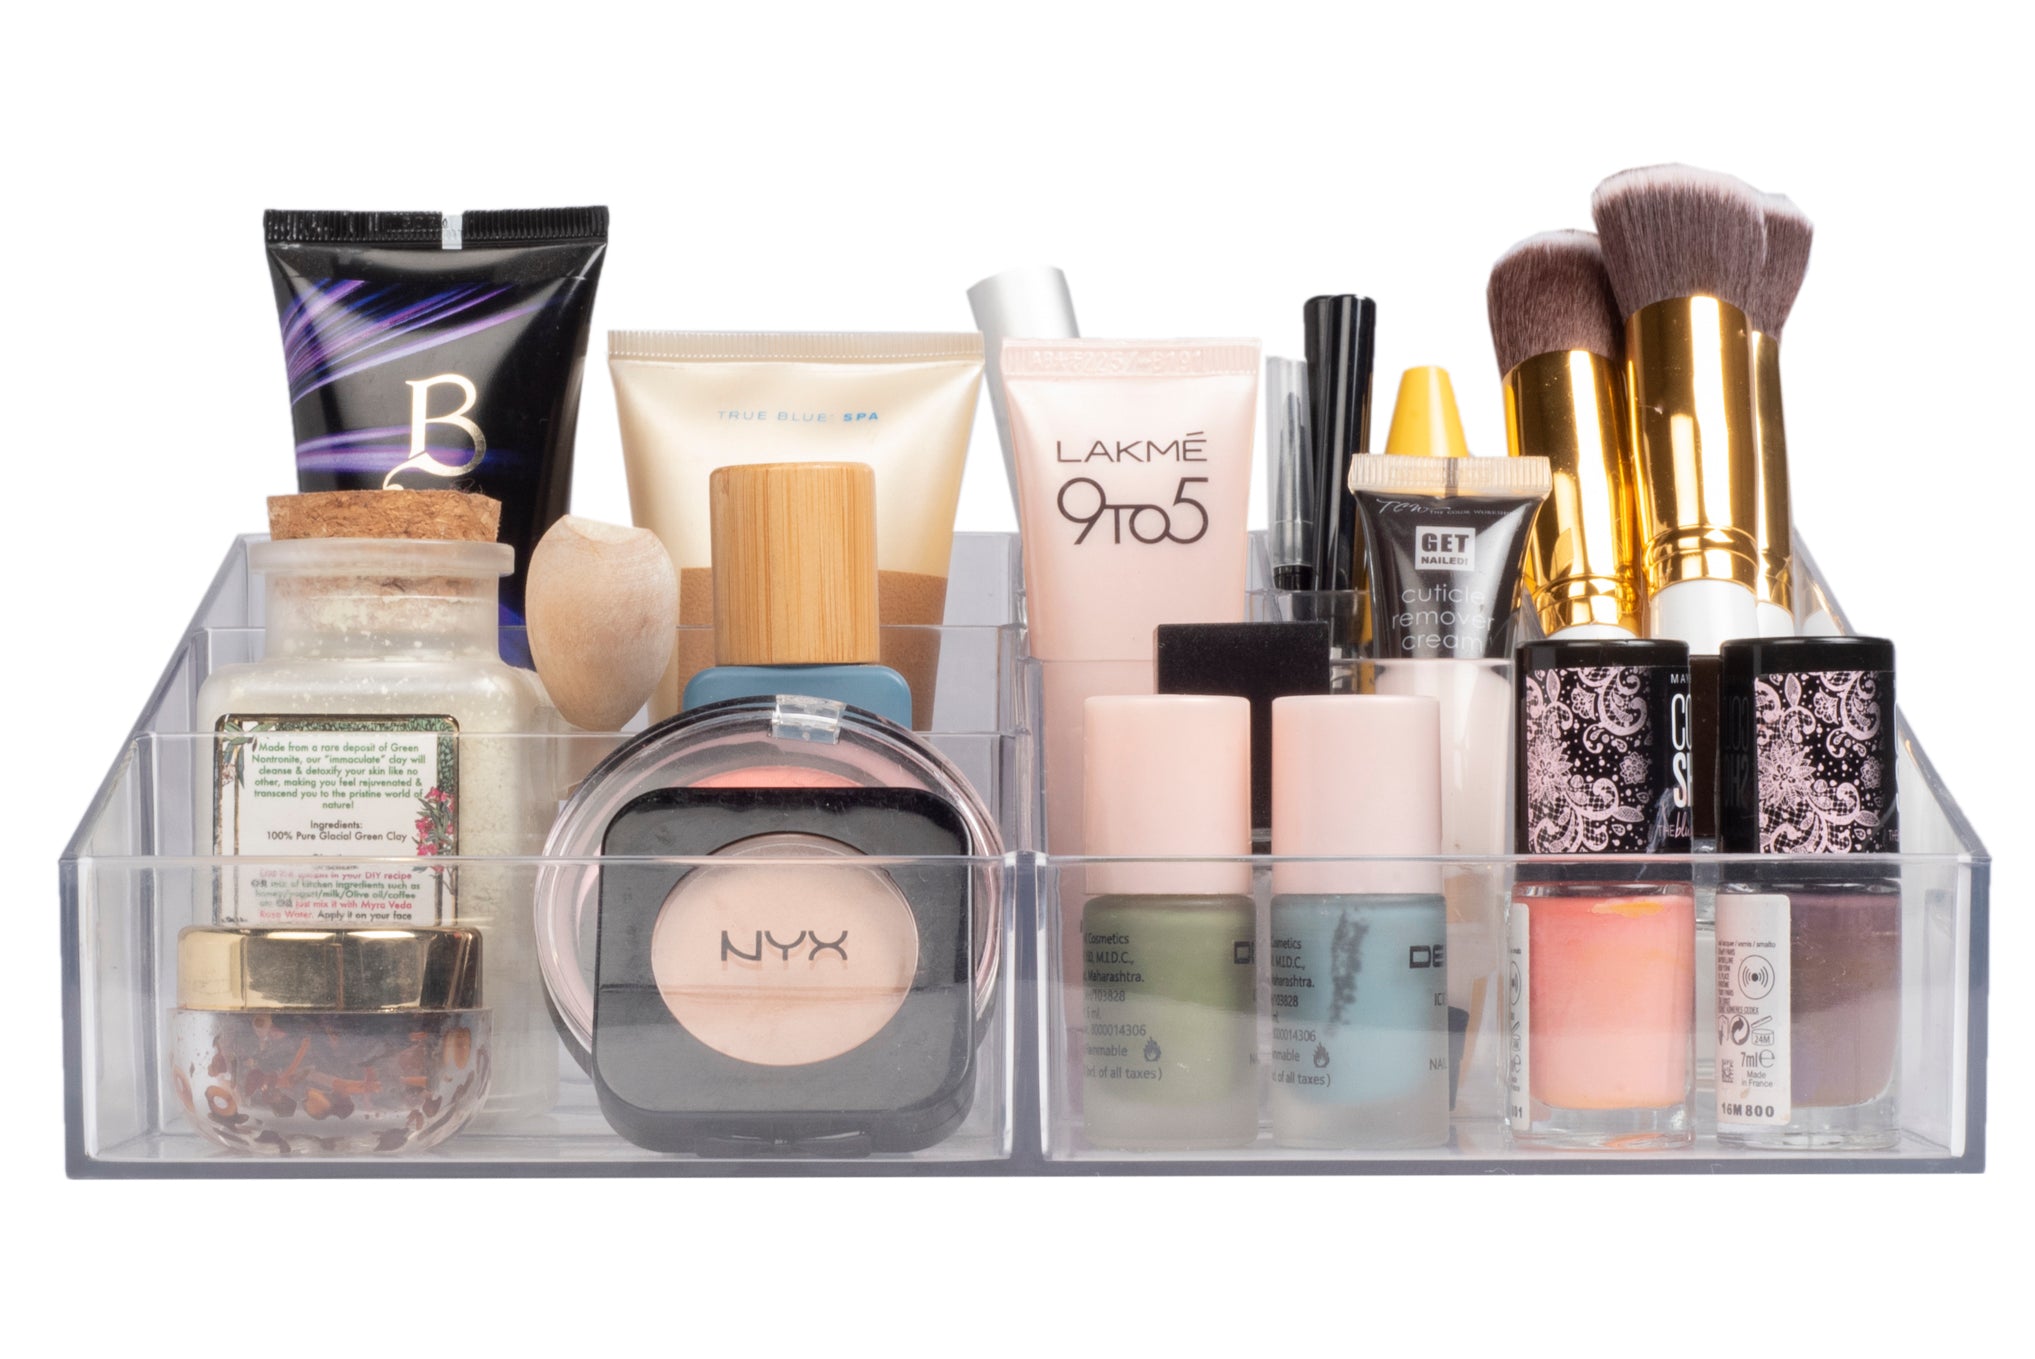 Cosmetic Organizer| 9 Compartments